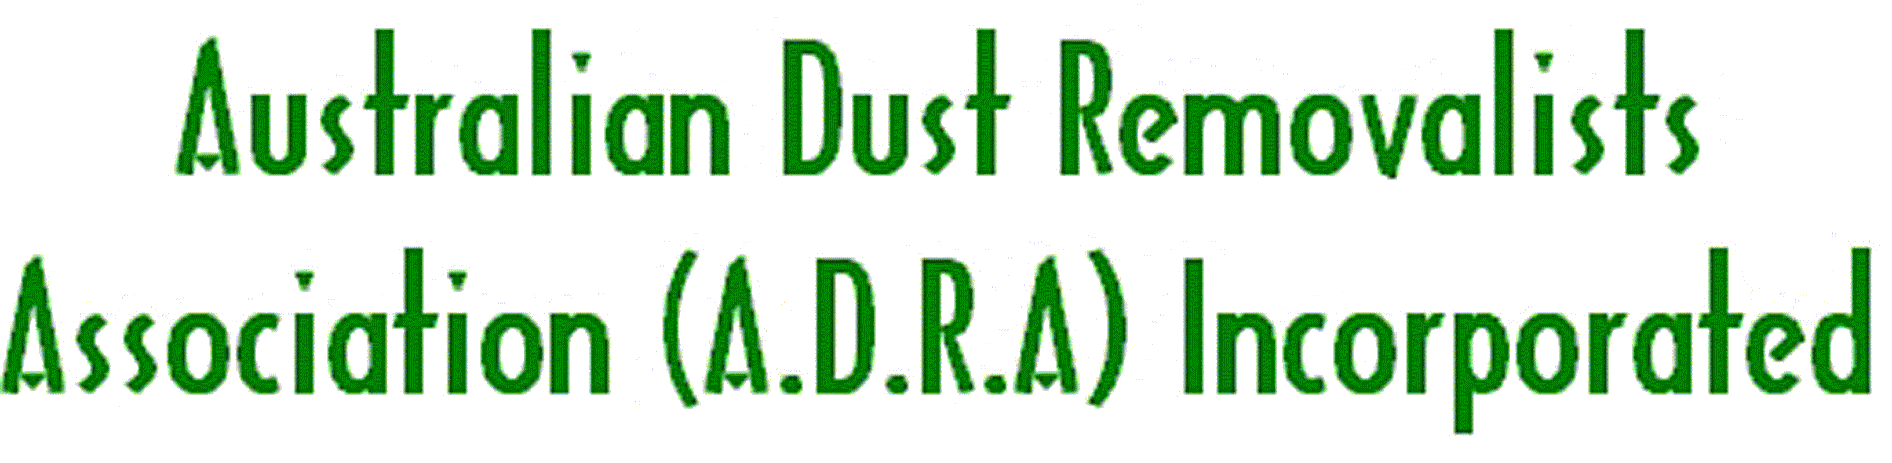 Australian Dust Removalists Association ADRA 